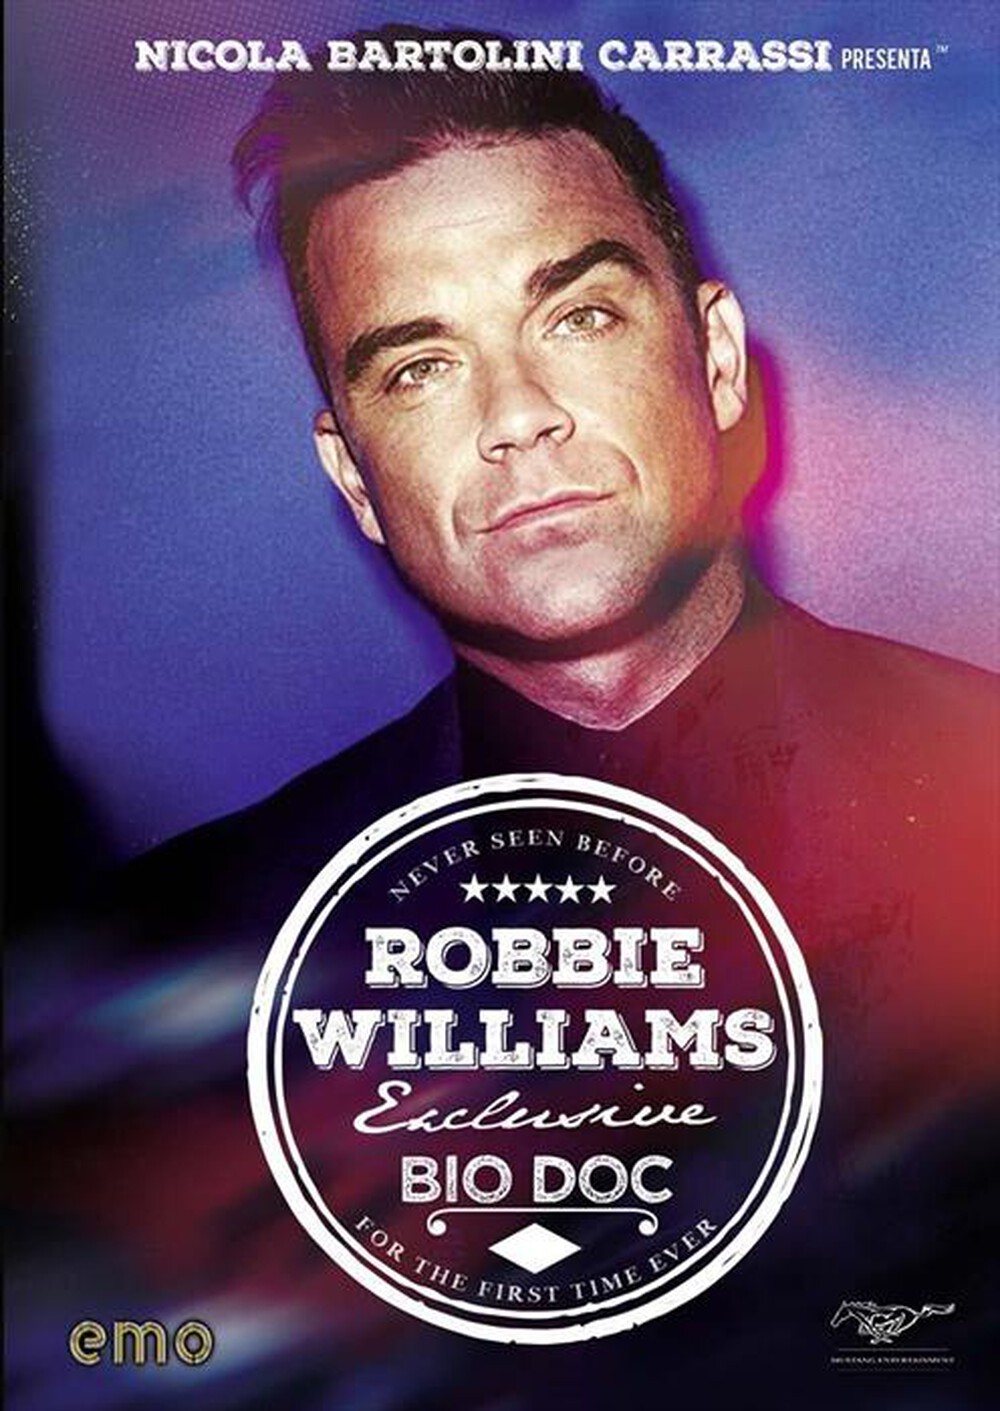 "CECCHI GORI - Robbie Williams - Exclusive Bio Doc"